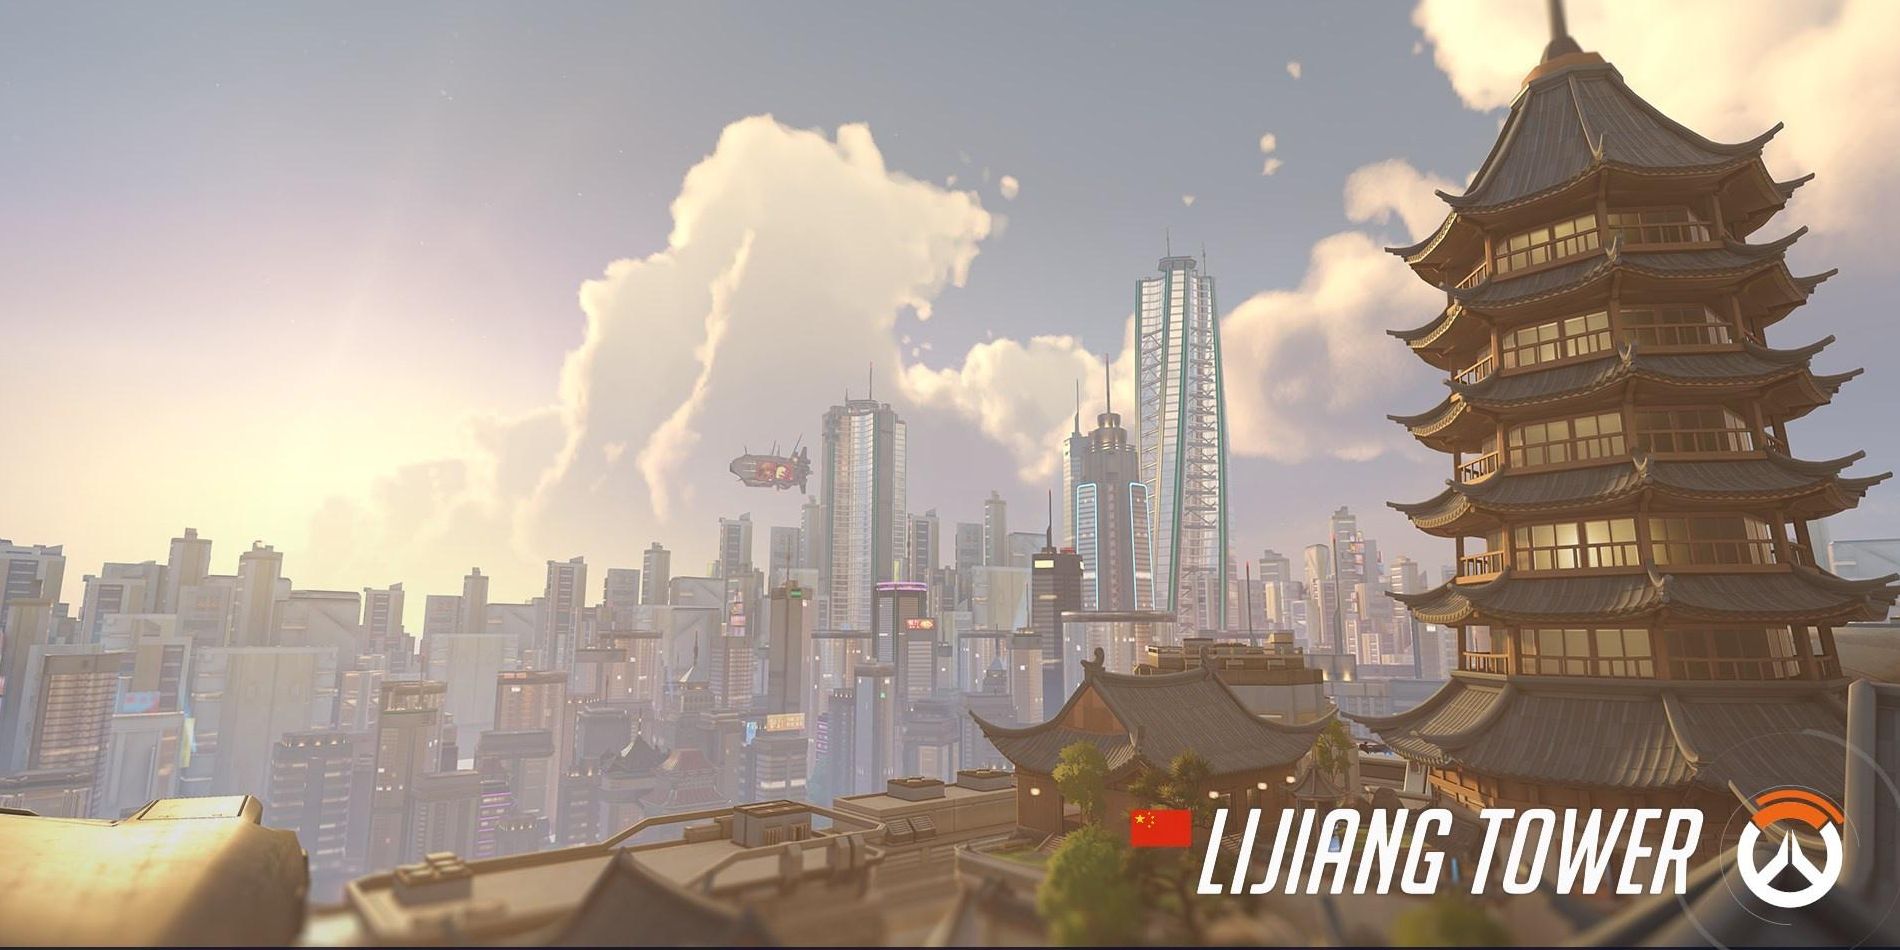 Lijiang Tower's loading screen in Overwatch 2.